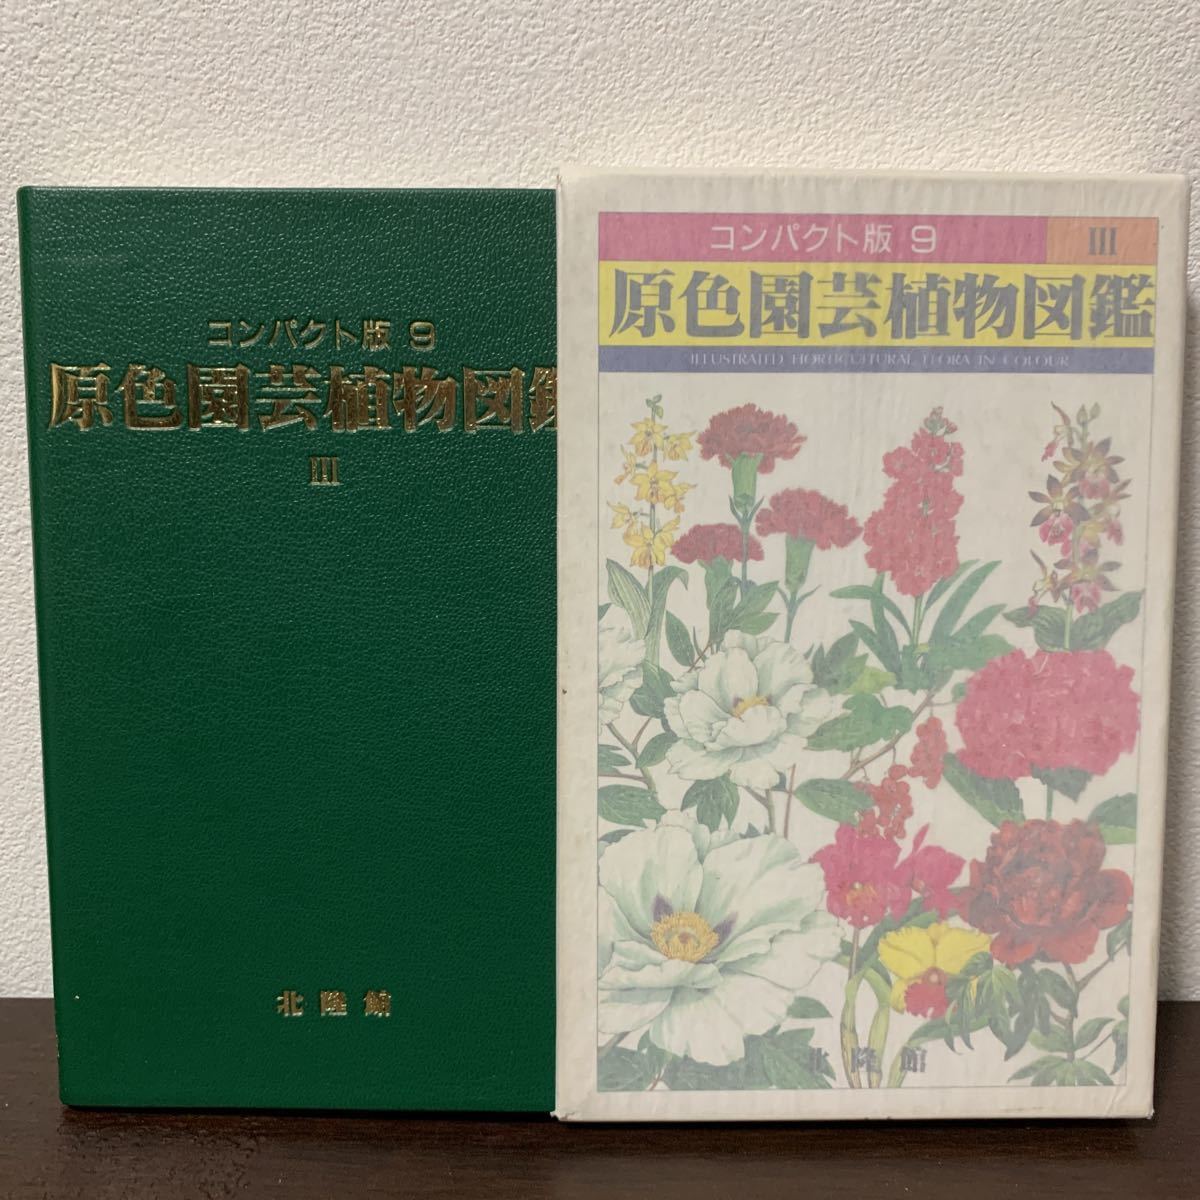 190906◇jm2【植物/花】函有りコンパクト版《9》 原色園芸植物図鑑Ⅲ